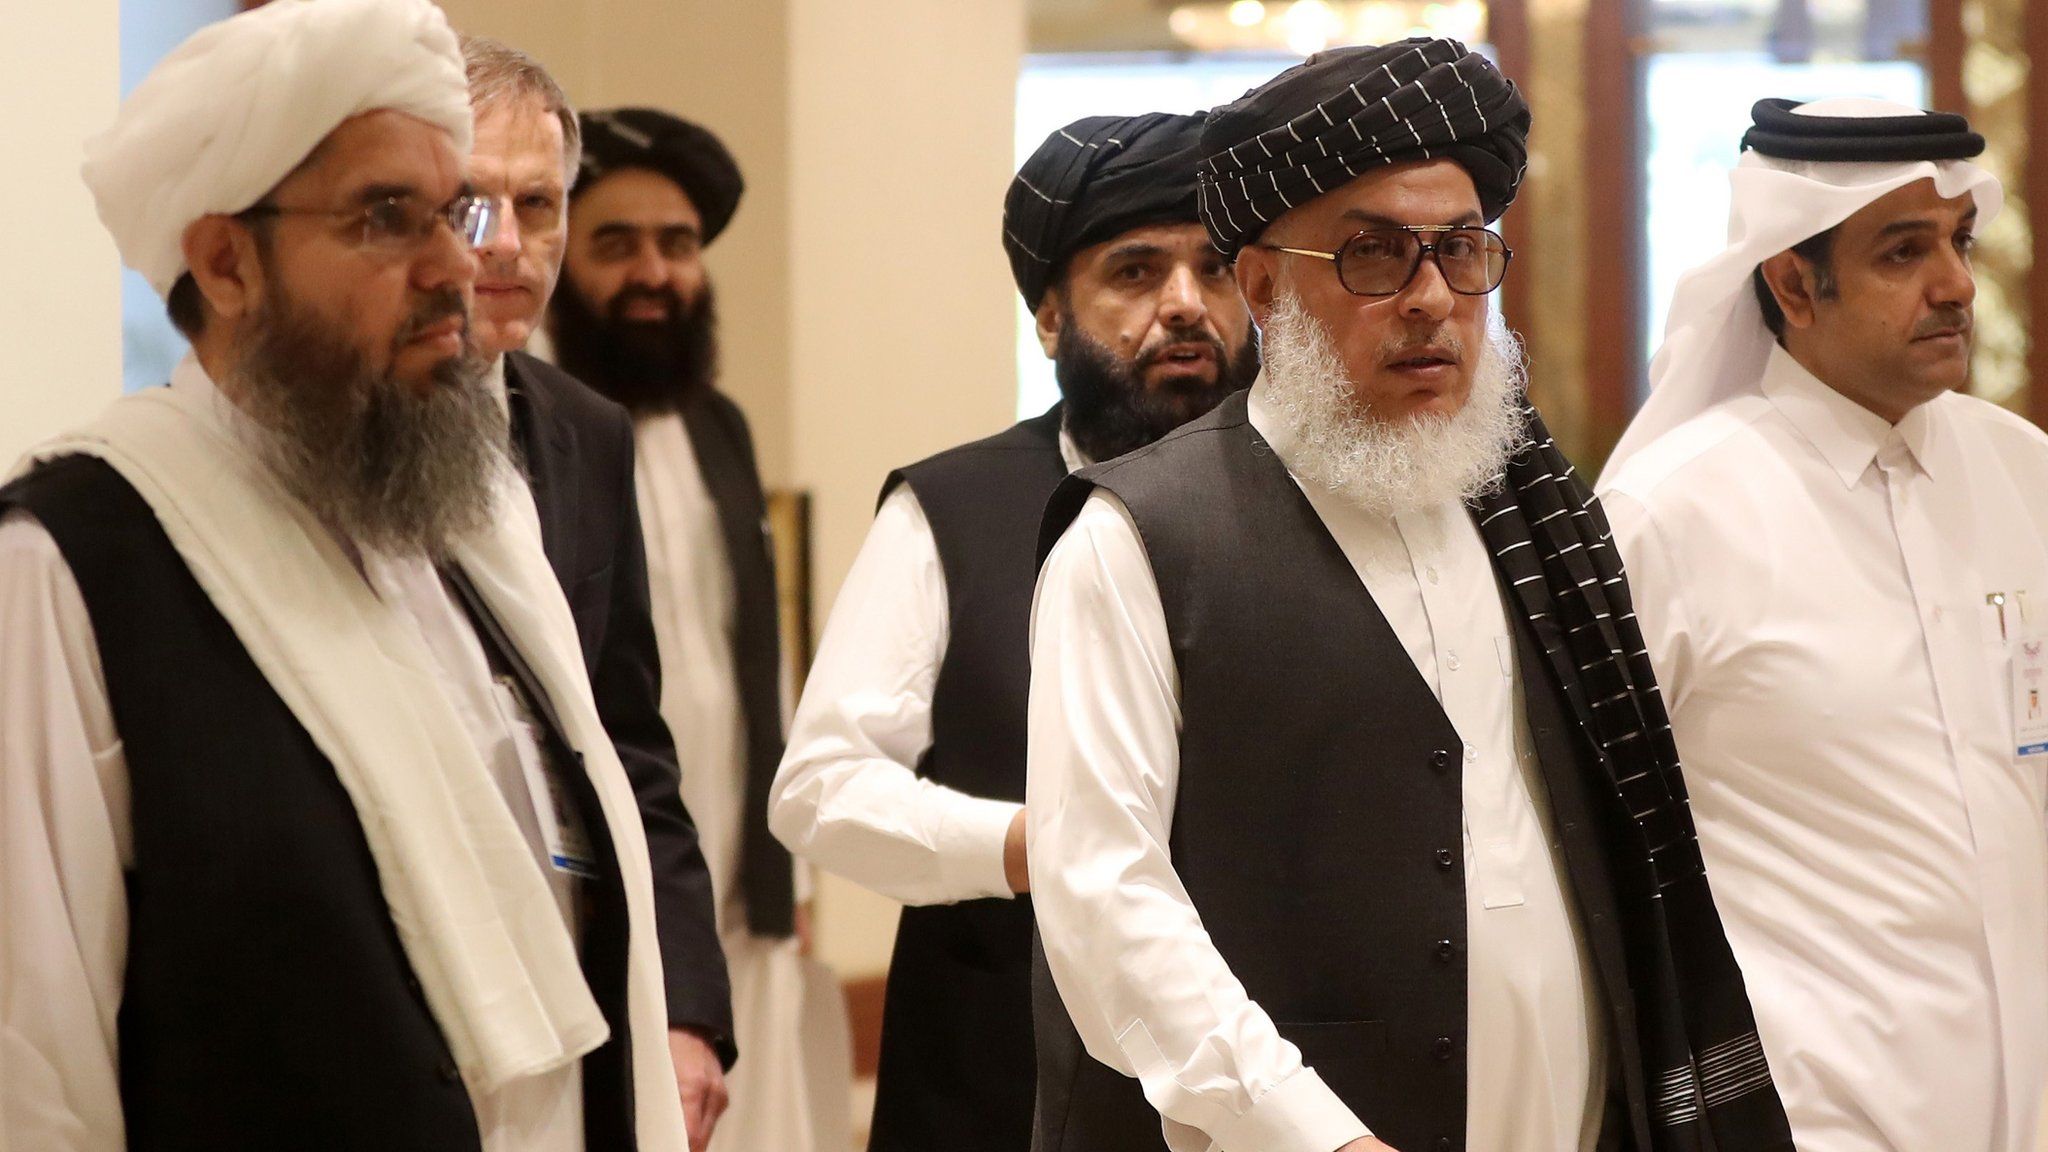 The Taliban"s former envoy to Saudi Arabia Shahabuddin Delawar (L) arrives with Taliban Qatar spokesman Suhhail Shaheen (C, behind) and Taliban negotiator Abbas Stanikzai (C, front) to attend the Intra Afghan Dialogue talks in the Qatari capital Doha on July 7, 2019.